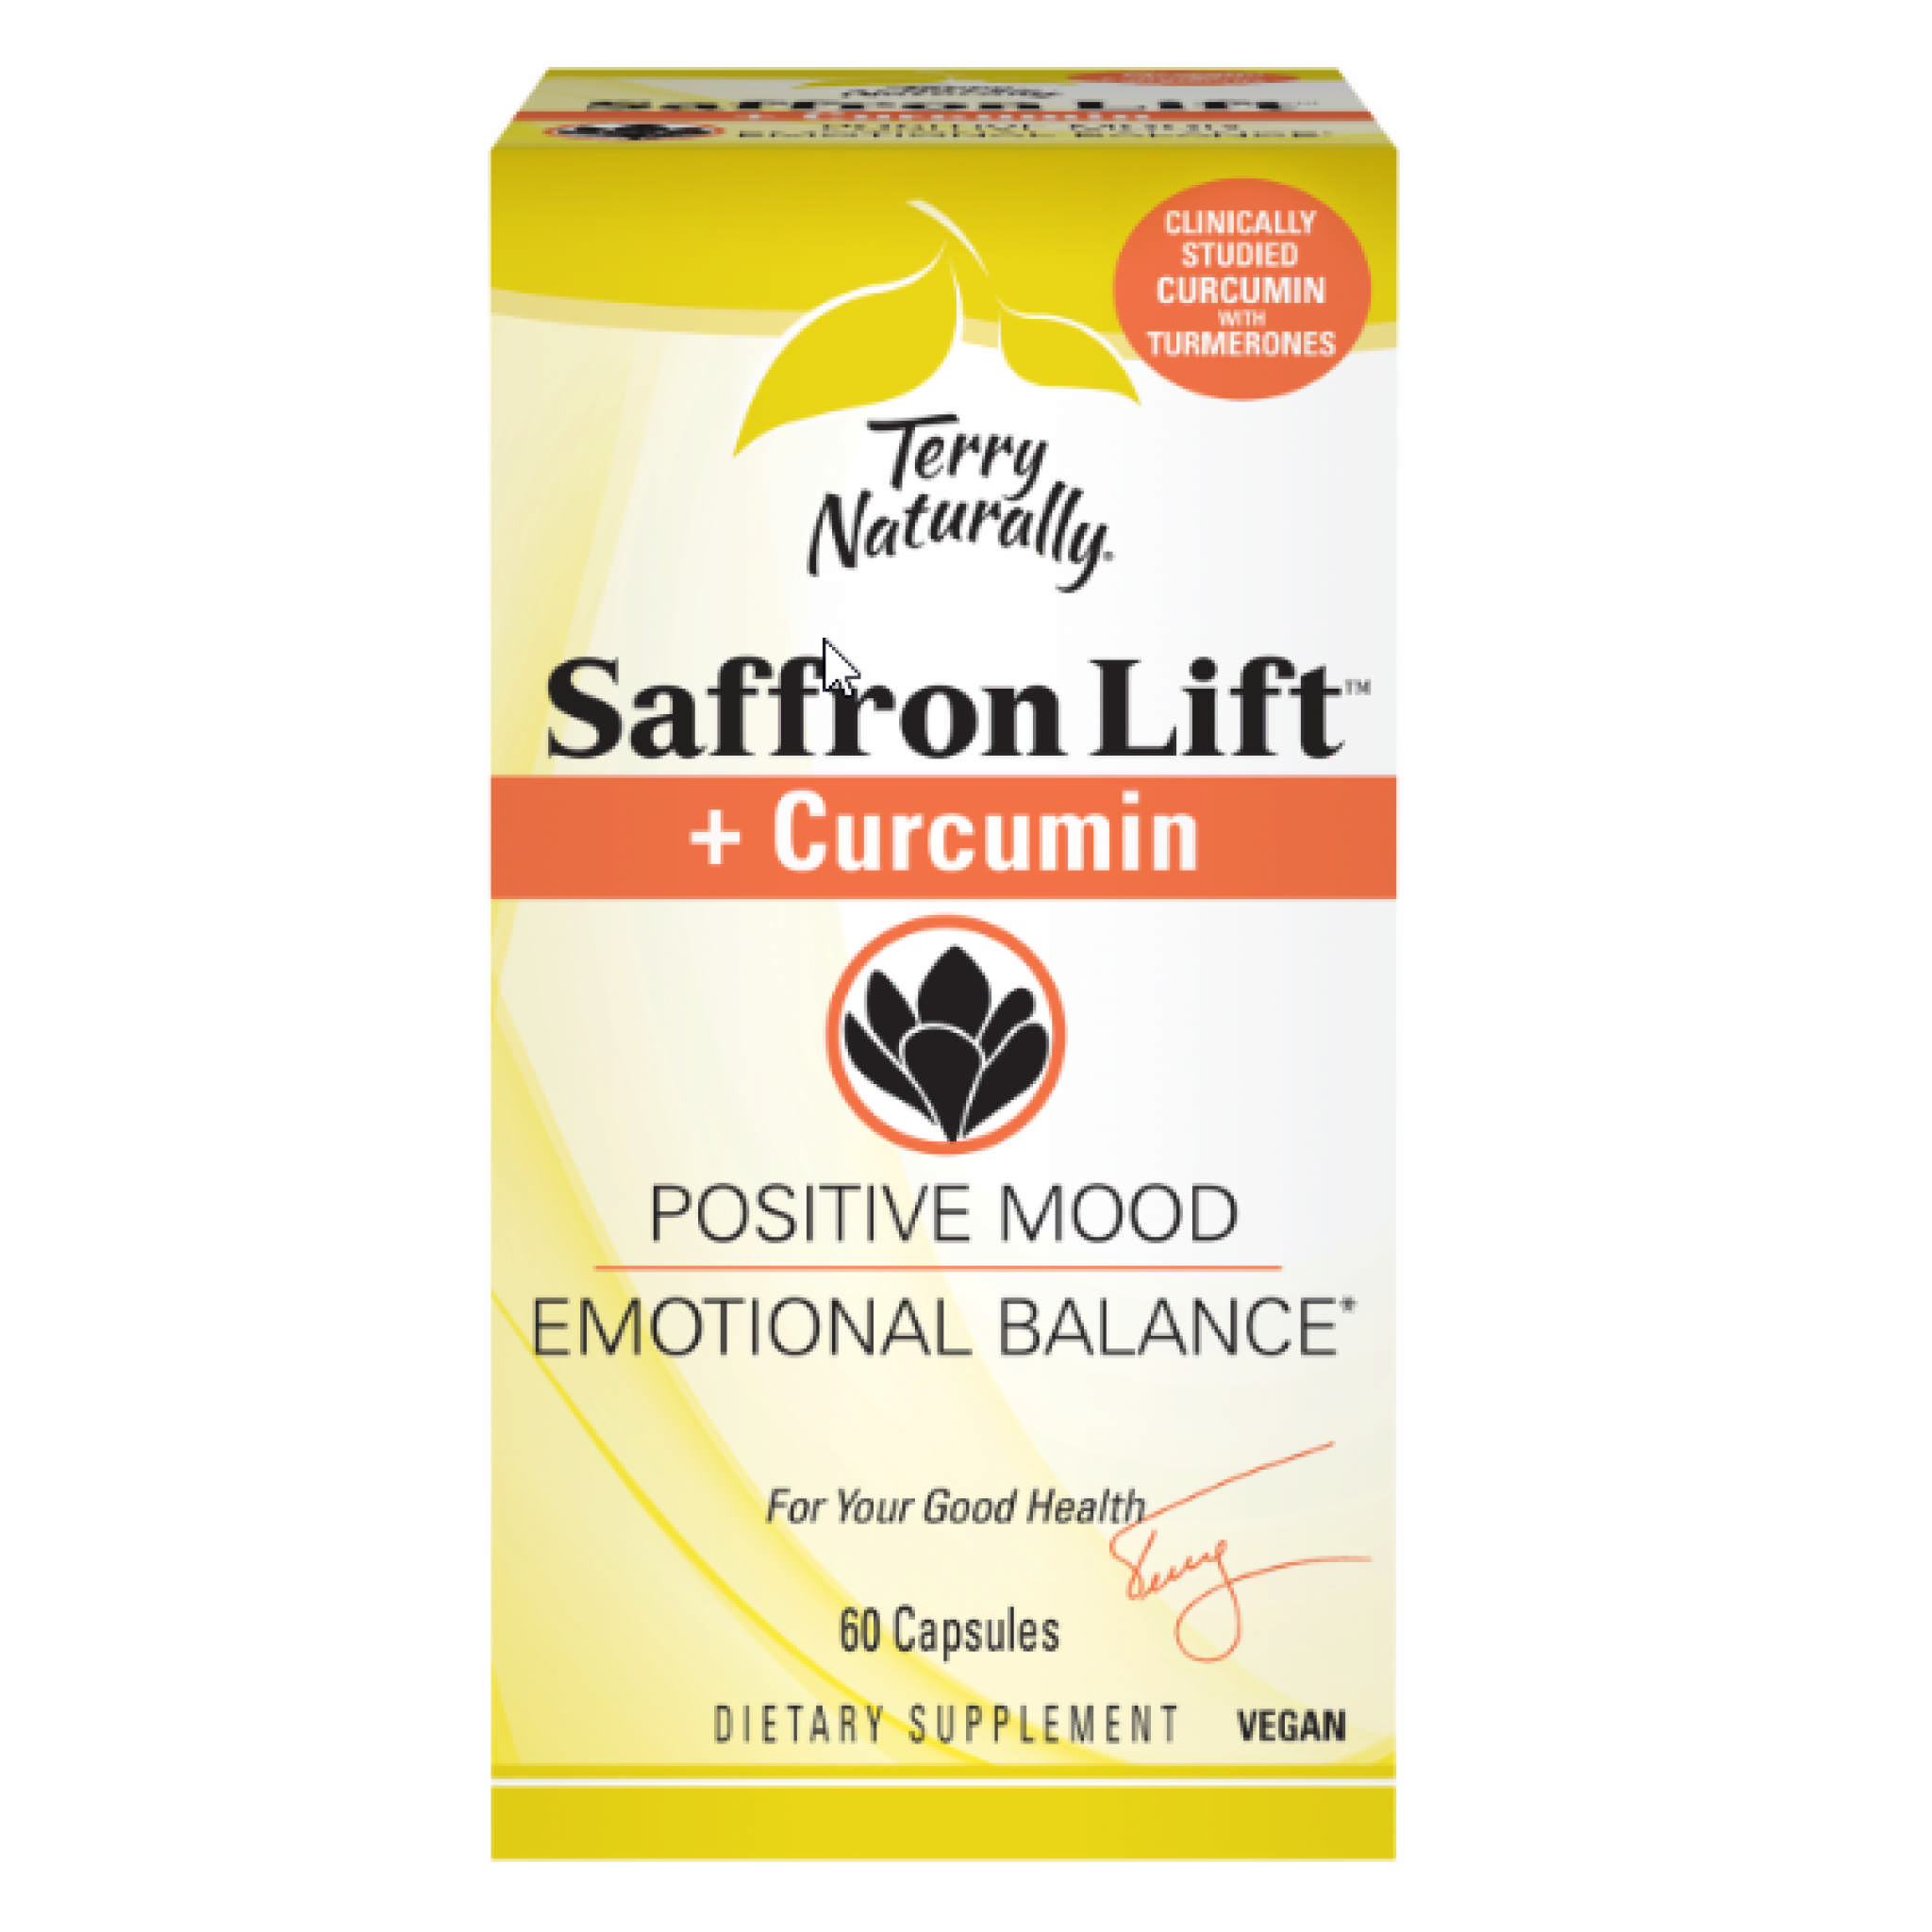 Terry Naturally - Saffron Lift + Curcumin